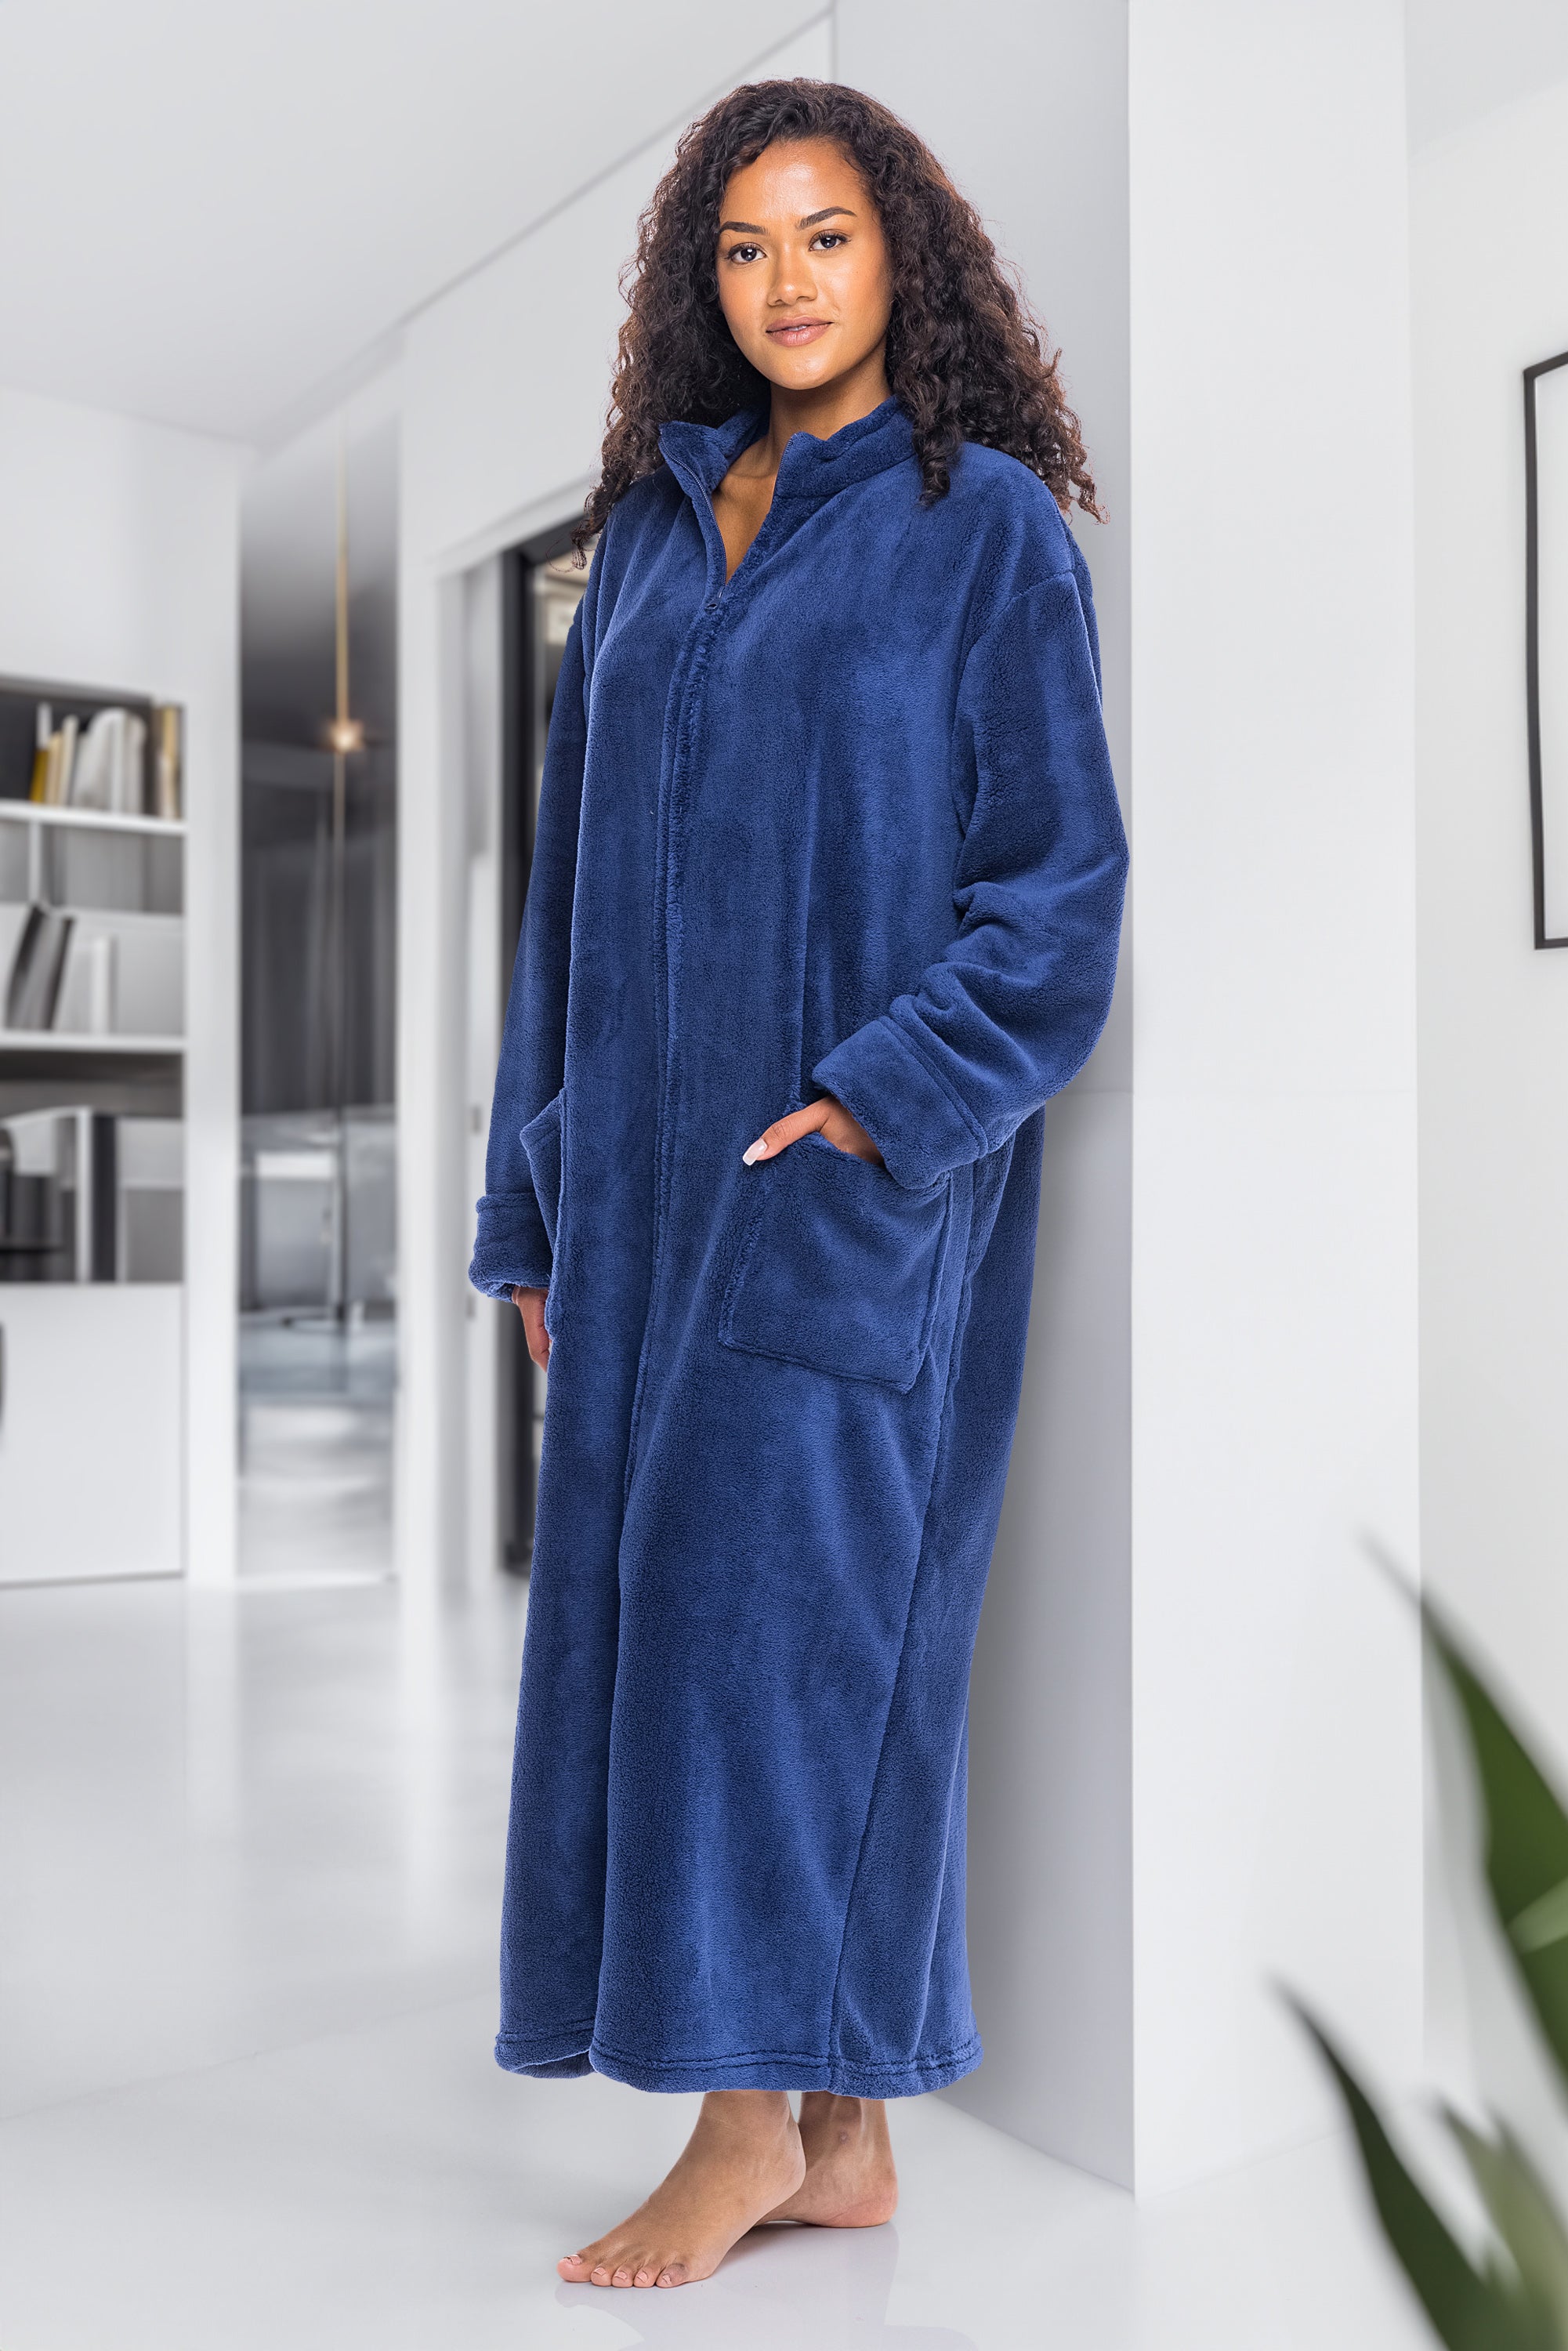 HEARTNICE Womens Hooded Fleece Robe, Long Fluffy Thick Warm Plush Bathrobe,( Black,L-XL) - Walmart.com